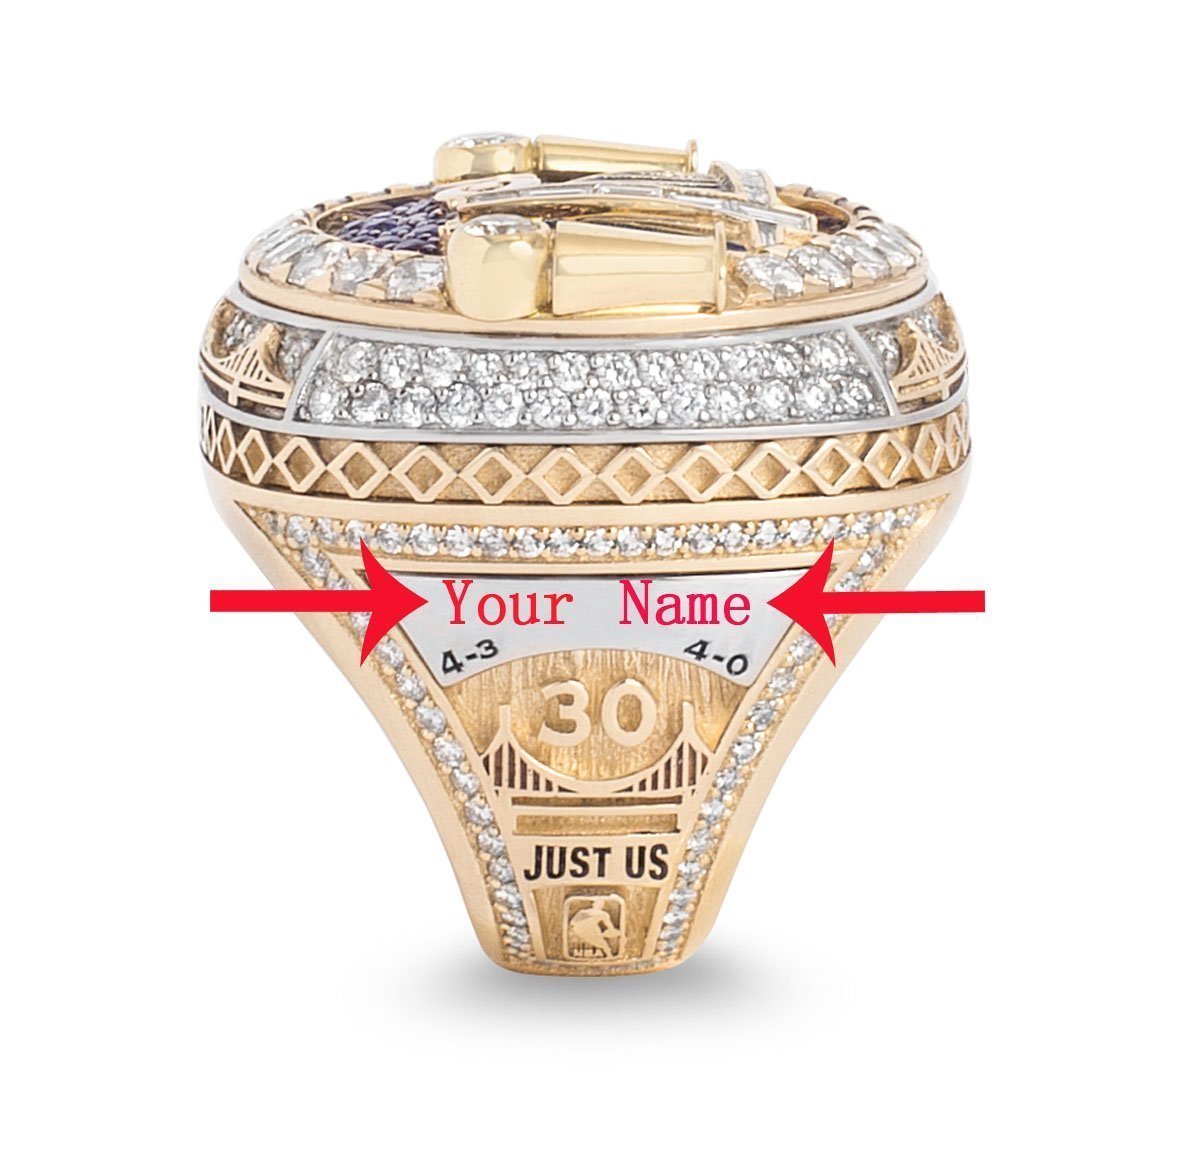 Golden State Warriors NBA Championship Ring (2018) - Rings For Champs, NFL rings, MLB rings, NBA rings, NHL rings, NCAA rings, Super bowl ring, Superbowl ring, Super bowl rings, Superbowl rings, Dallas Cowboys